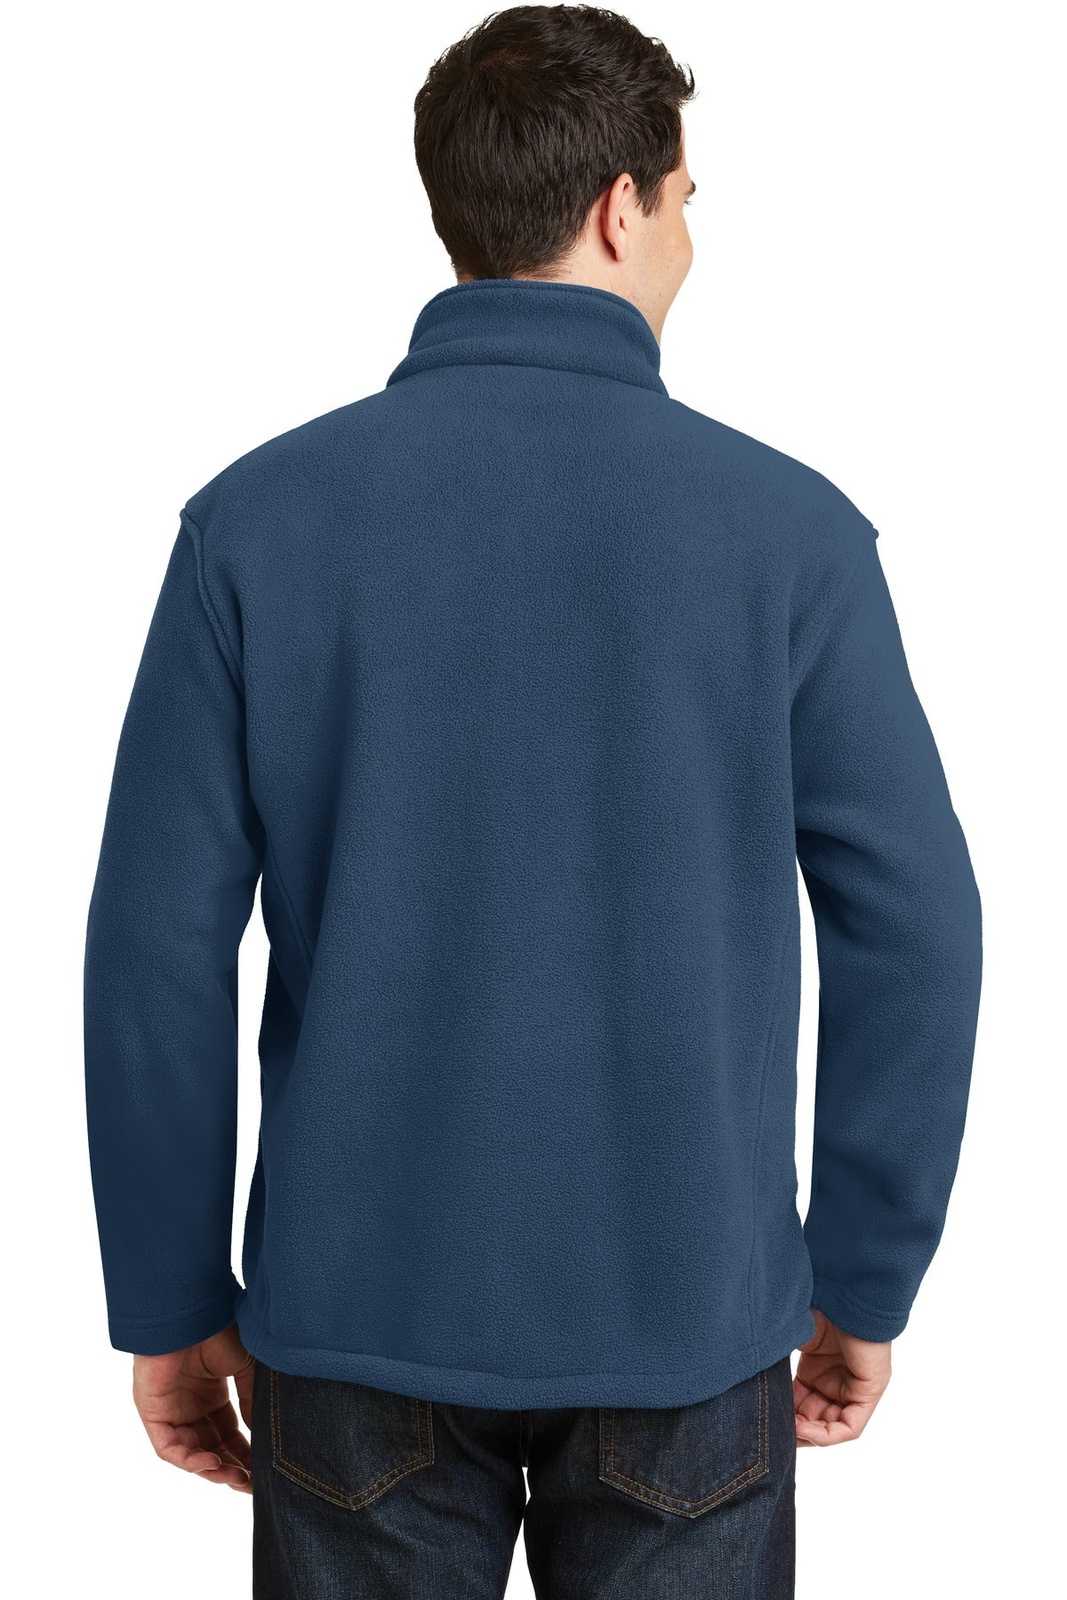 Port Authority F217 Value Fleece Jacket - Insignia Blue - HIT a Double - 1